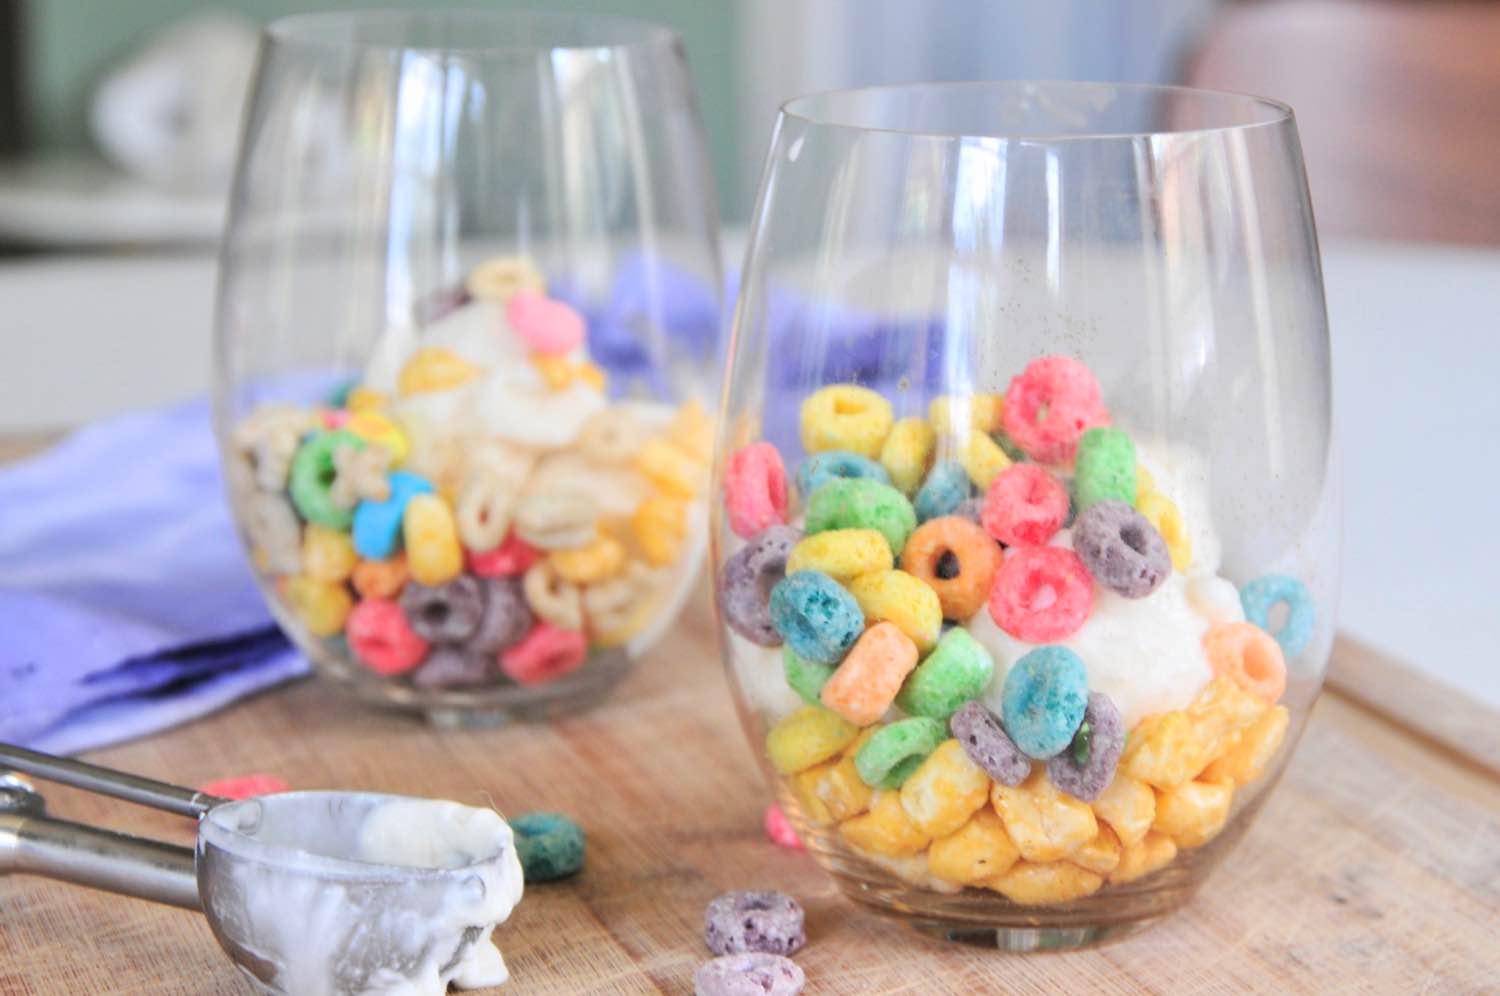 finished cereal frozen yogurt parfaits recipe pop shop america